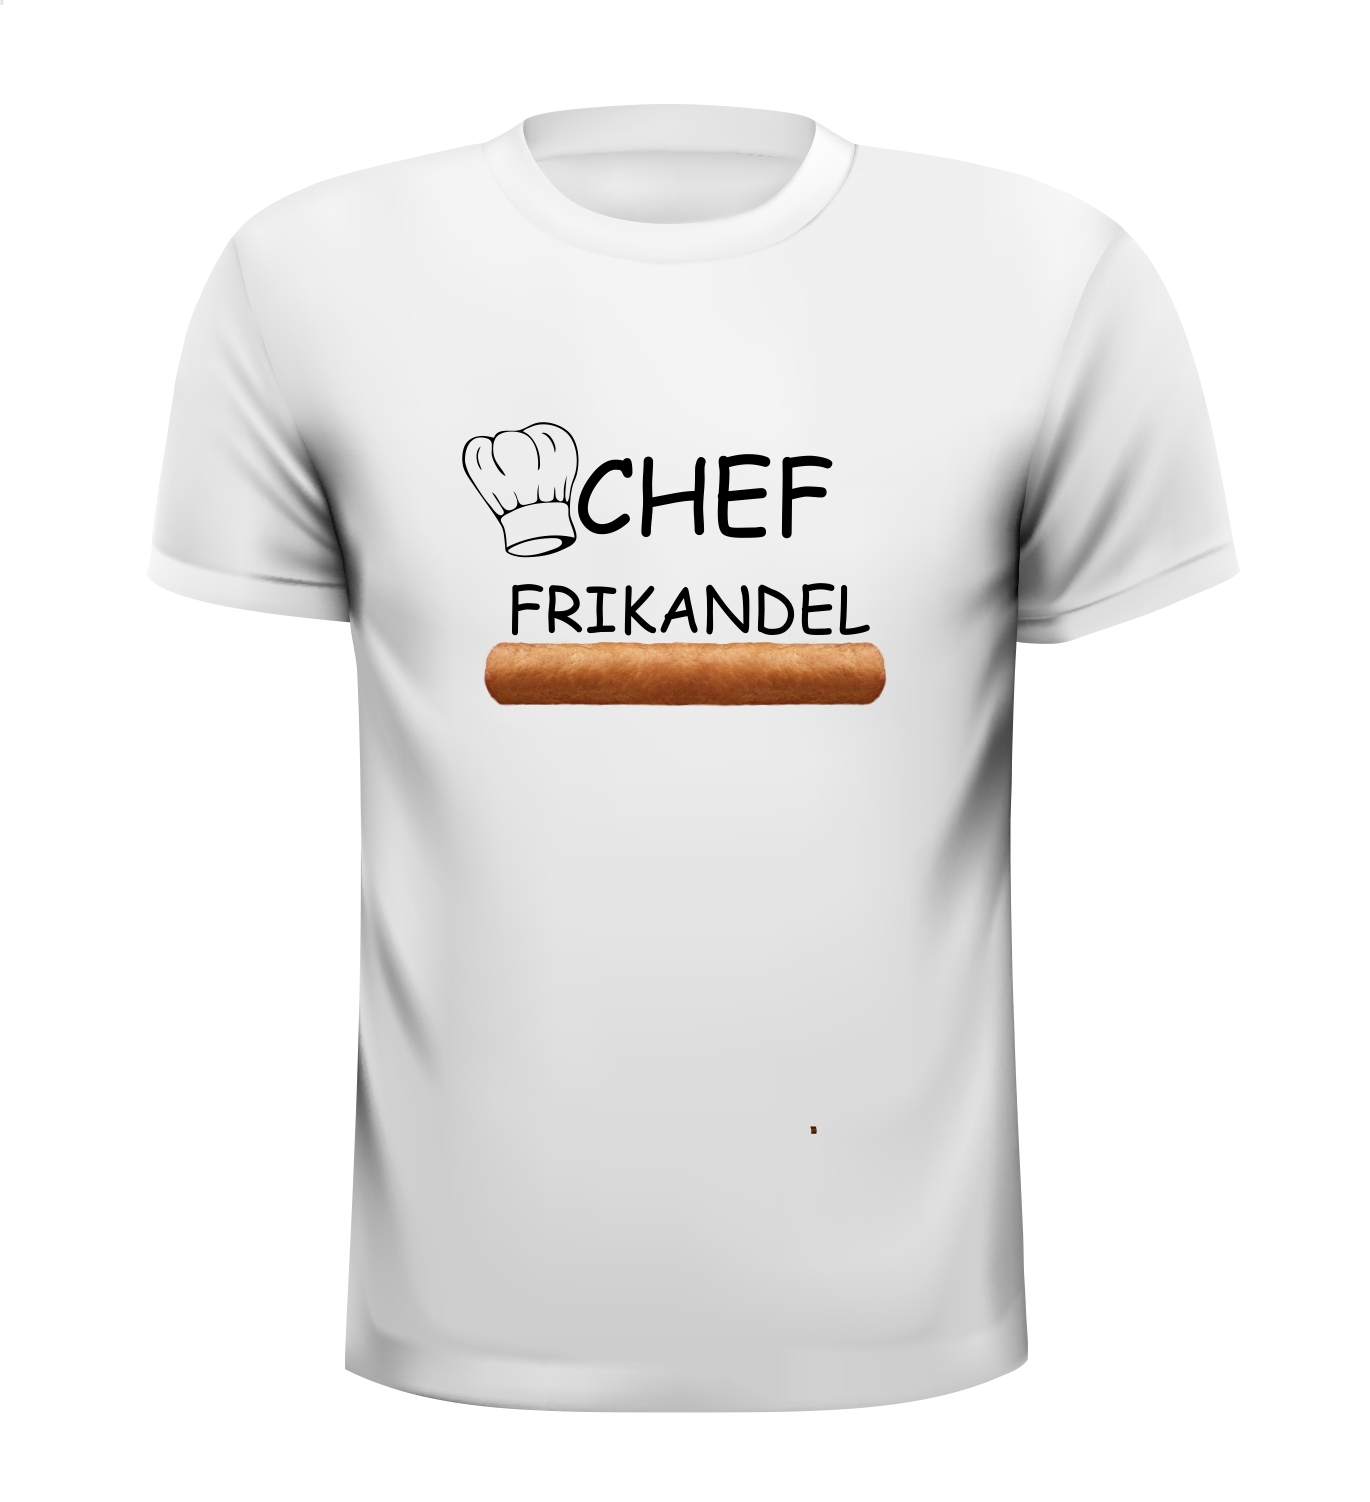 Chef frikandel t-shirt fastfood snackbar lekkere hap